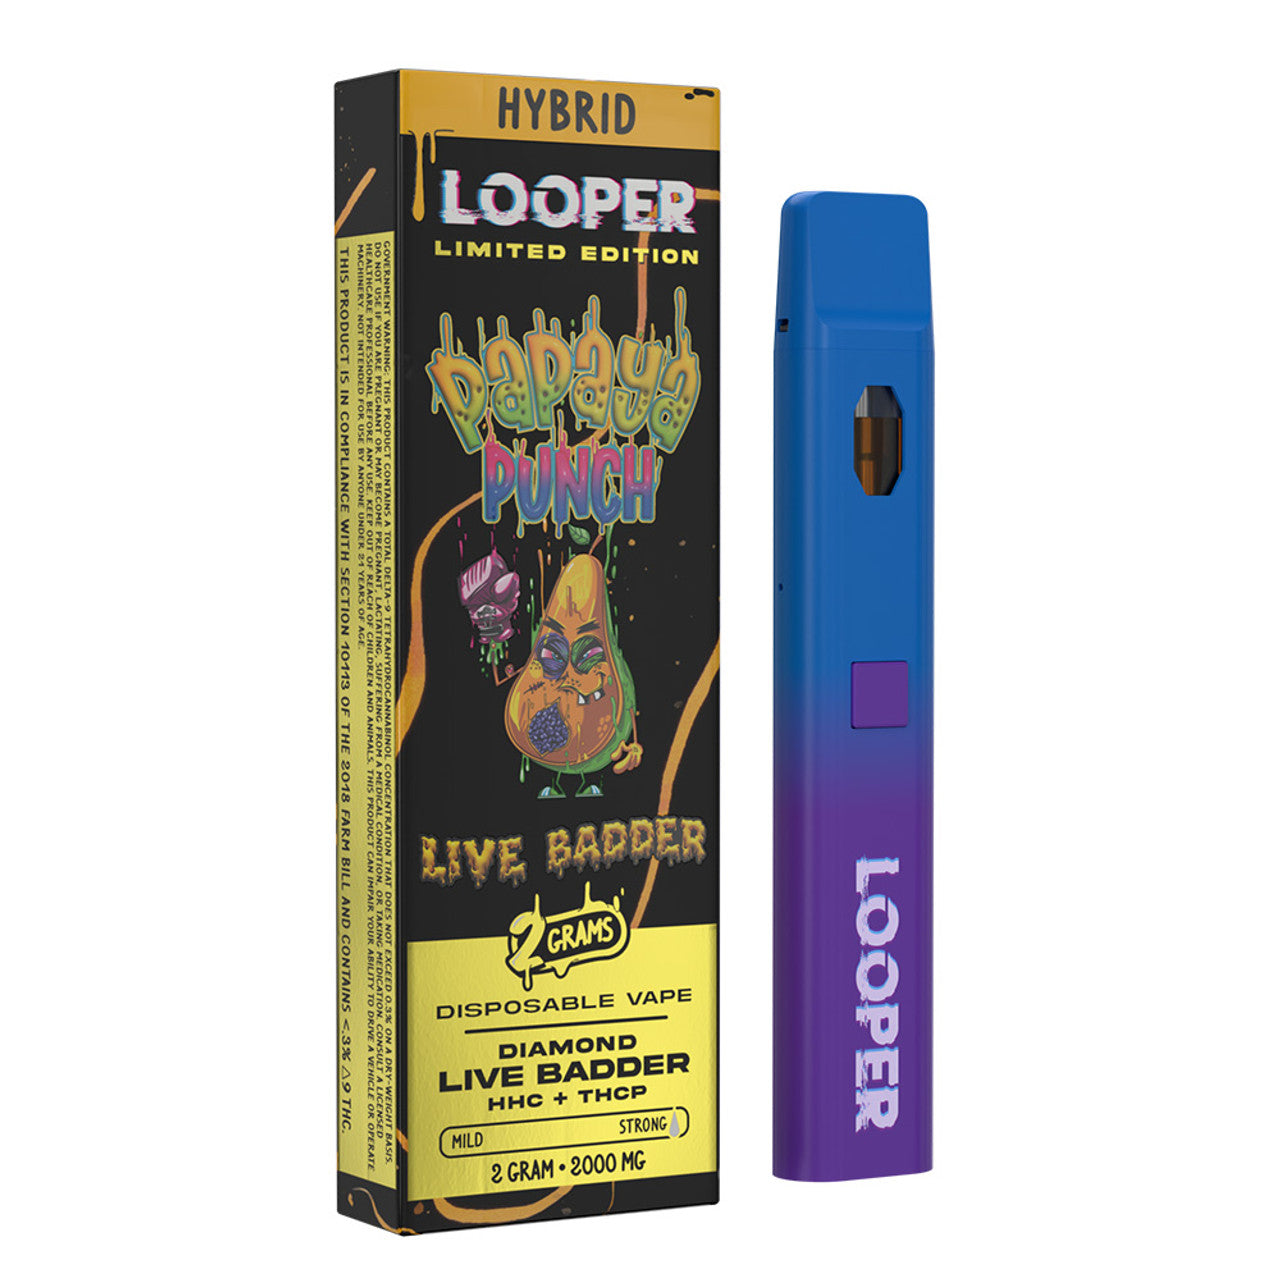 Looper Limited Edition Delta Diamond Live Badder + HHC + THCP Disposable Vape Device 2G - Guava (Sativa)